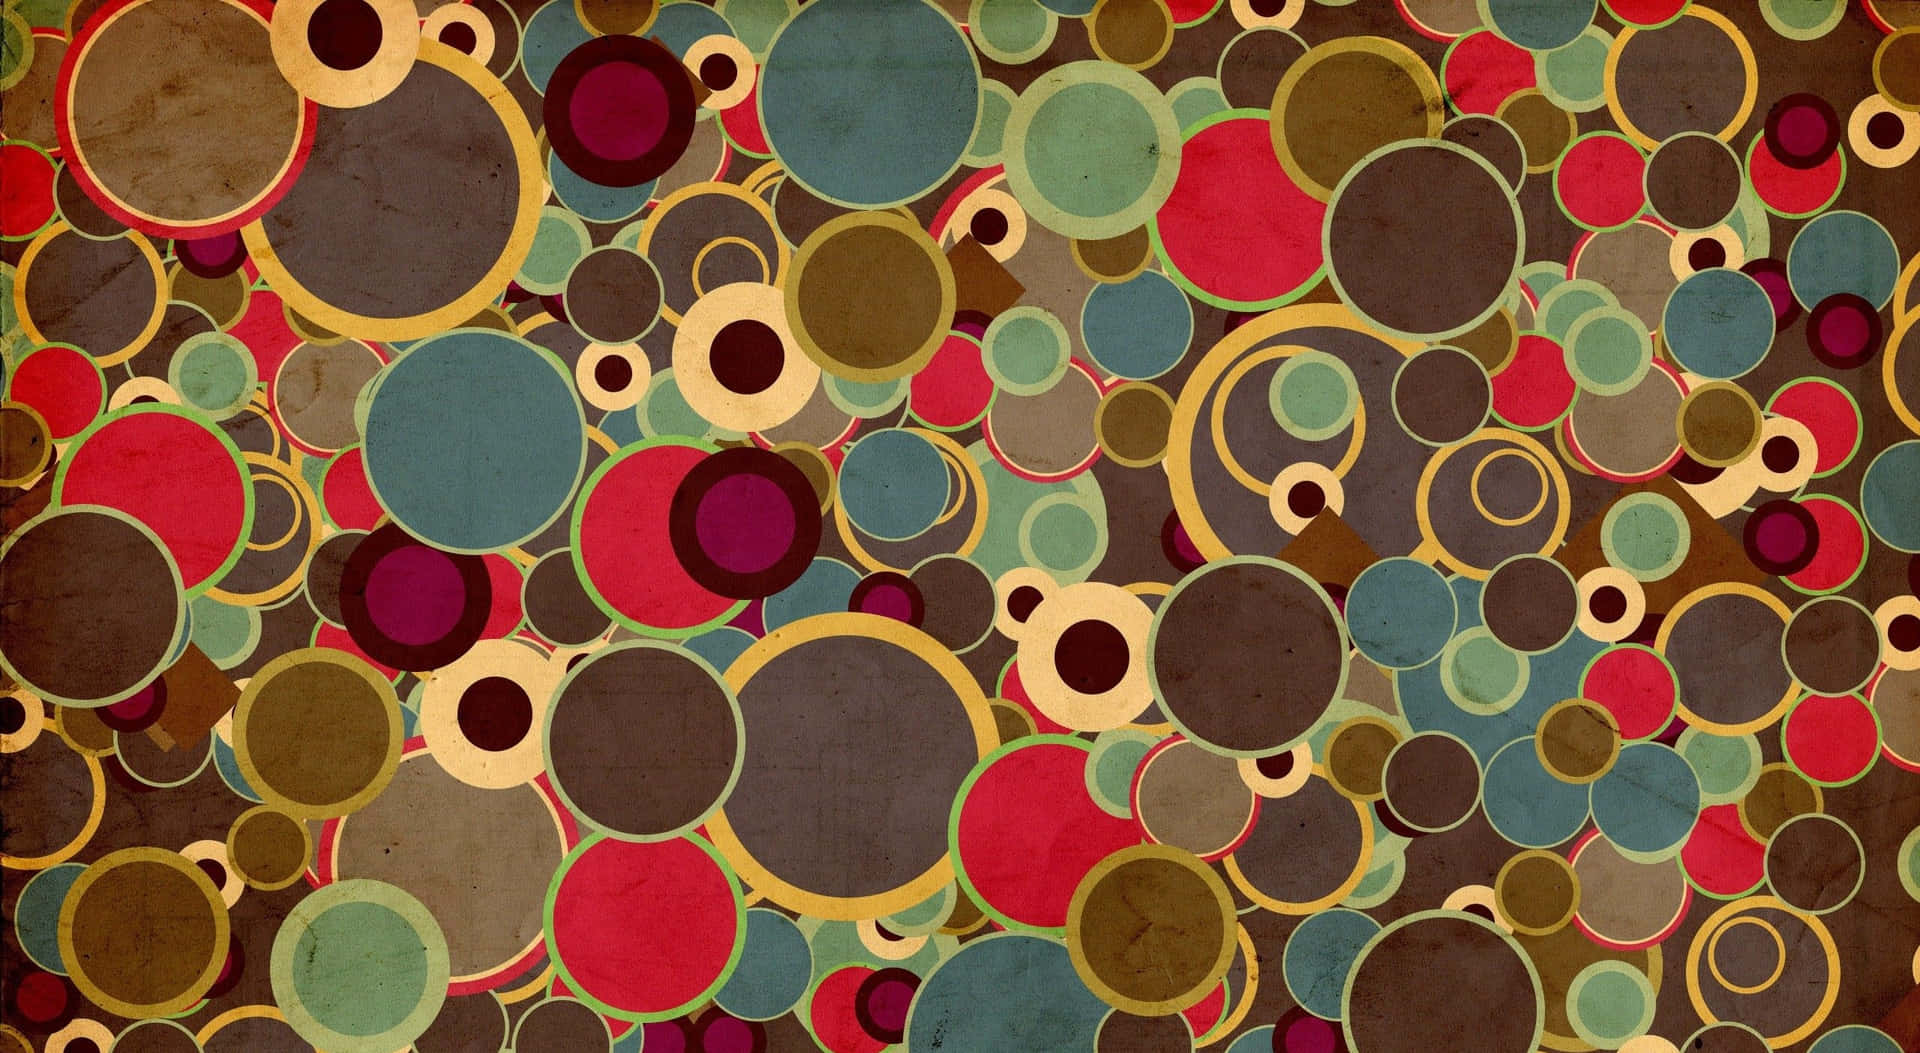 70s Aesthetic Desktop Psychedelic Circle Digital Art Wallpaper